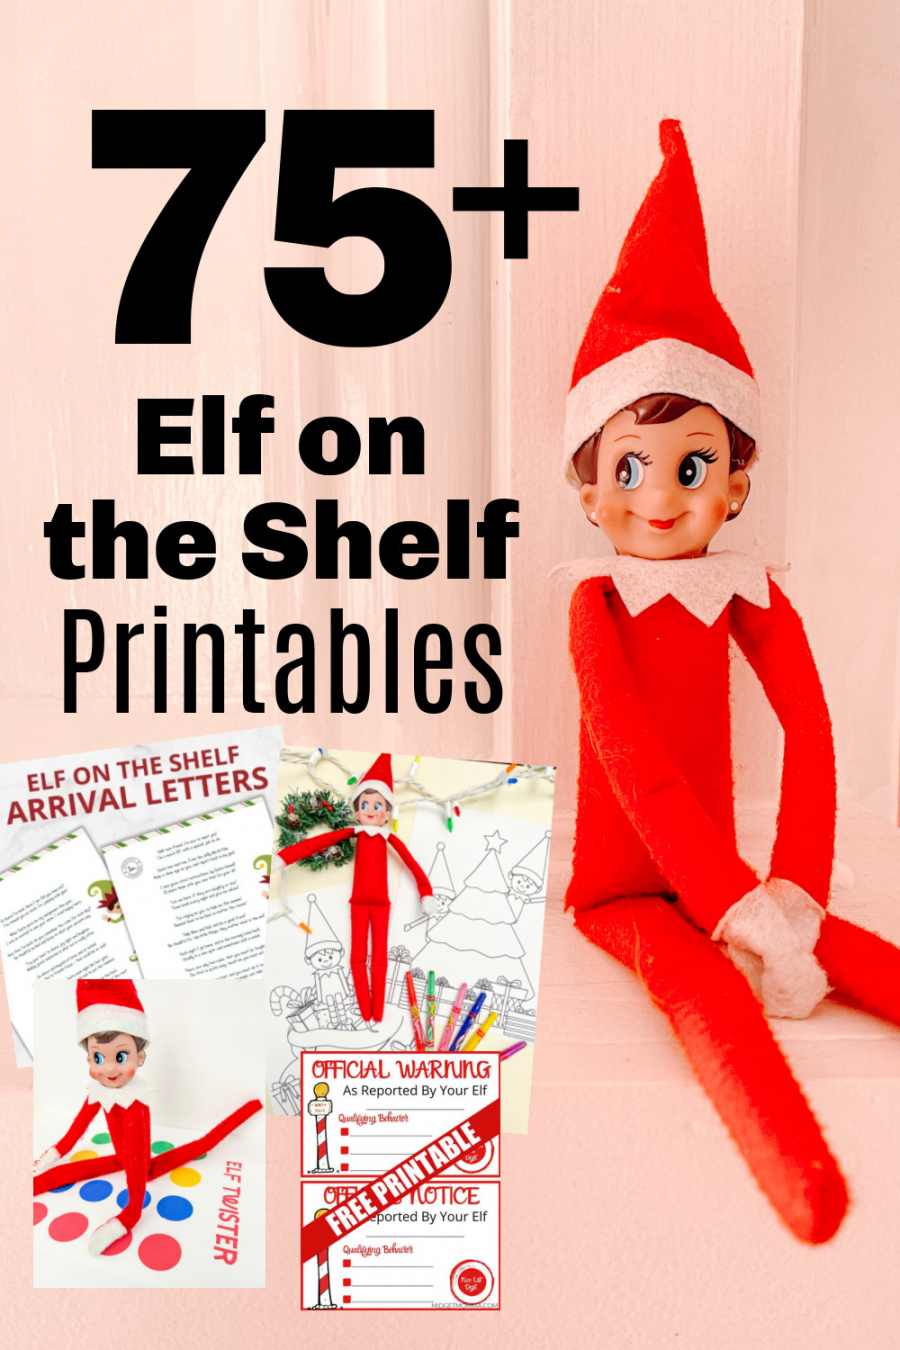 Elf On Shelf Printables Free - Printable - Ultimate List of FREE Elf on the Shelf Printables - Over